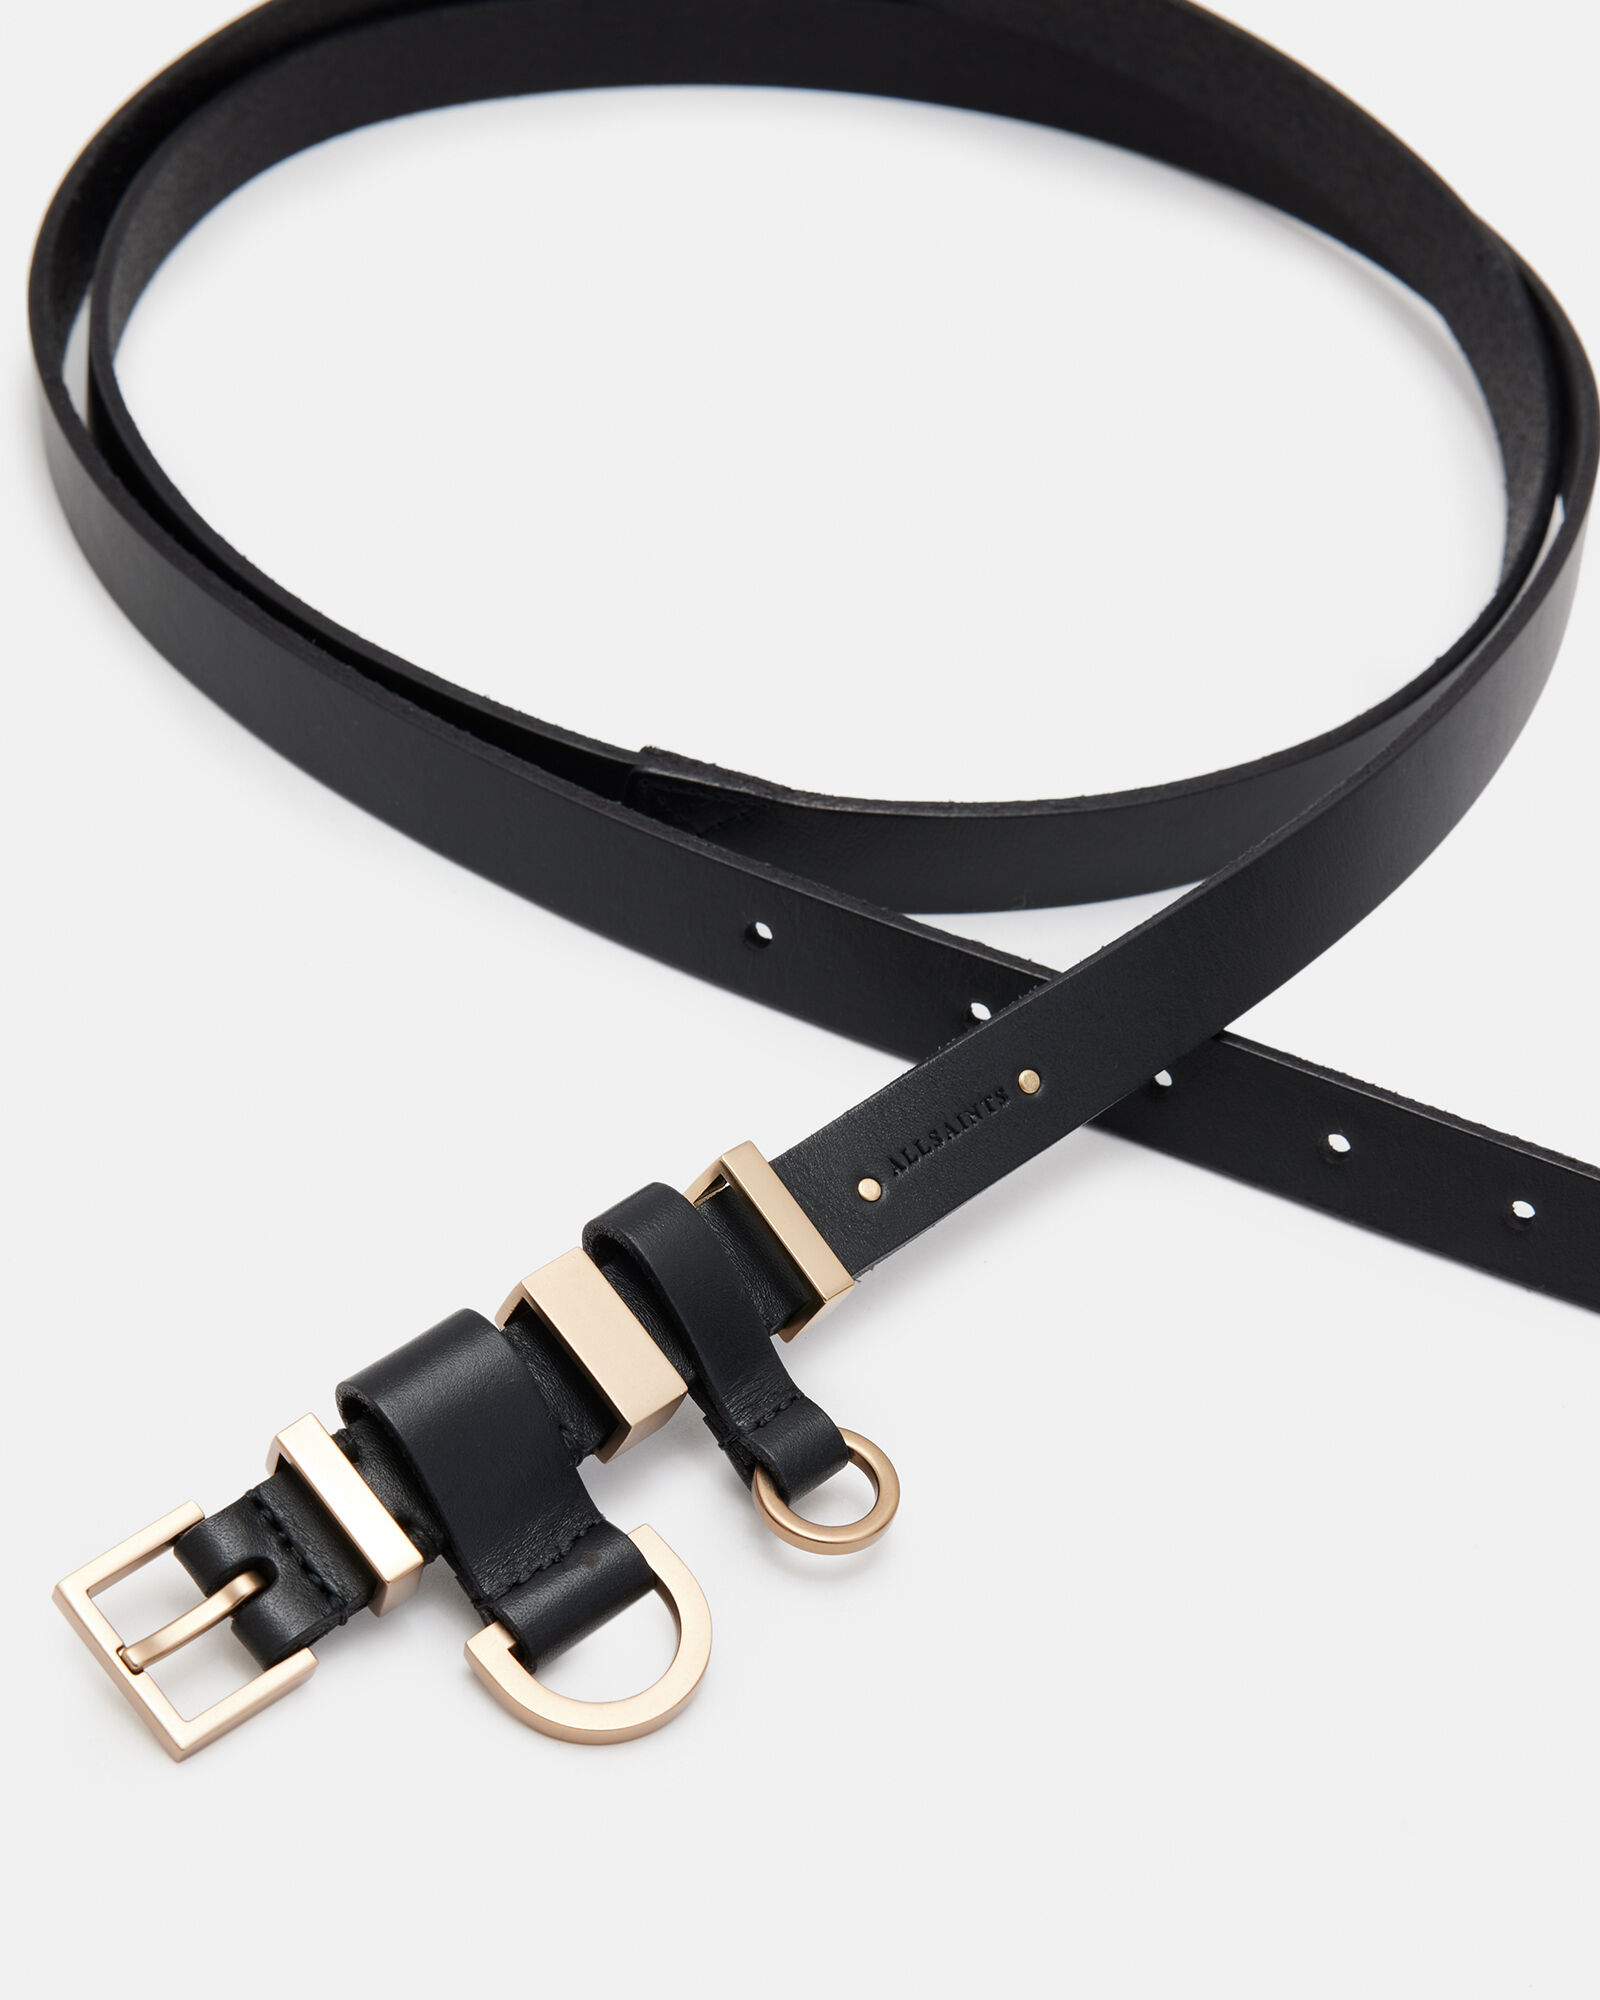 Ursa Leather Double Wrap Belt BLACK/WARM BRASS | ALLSAINTS US